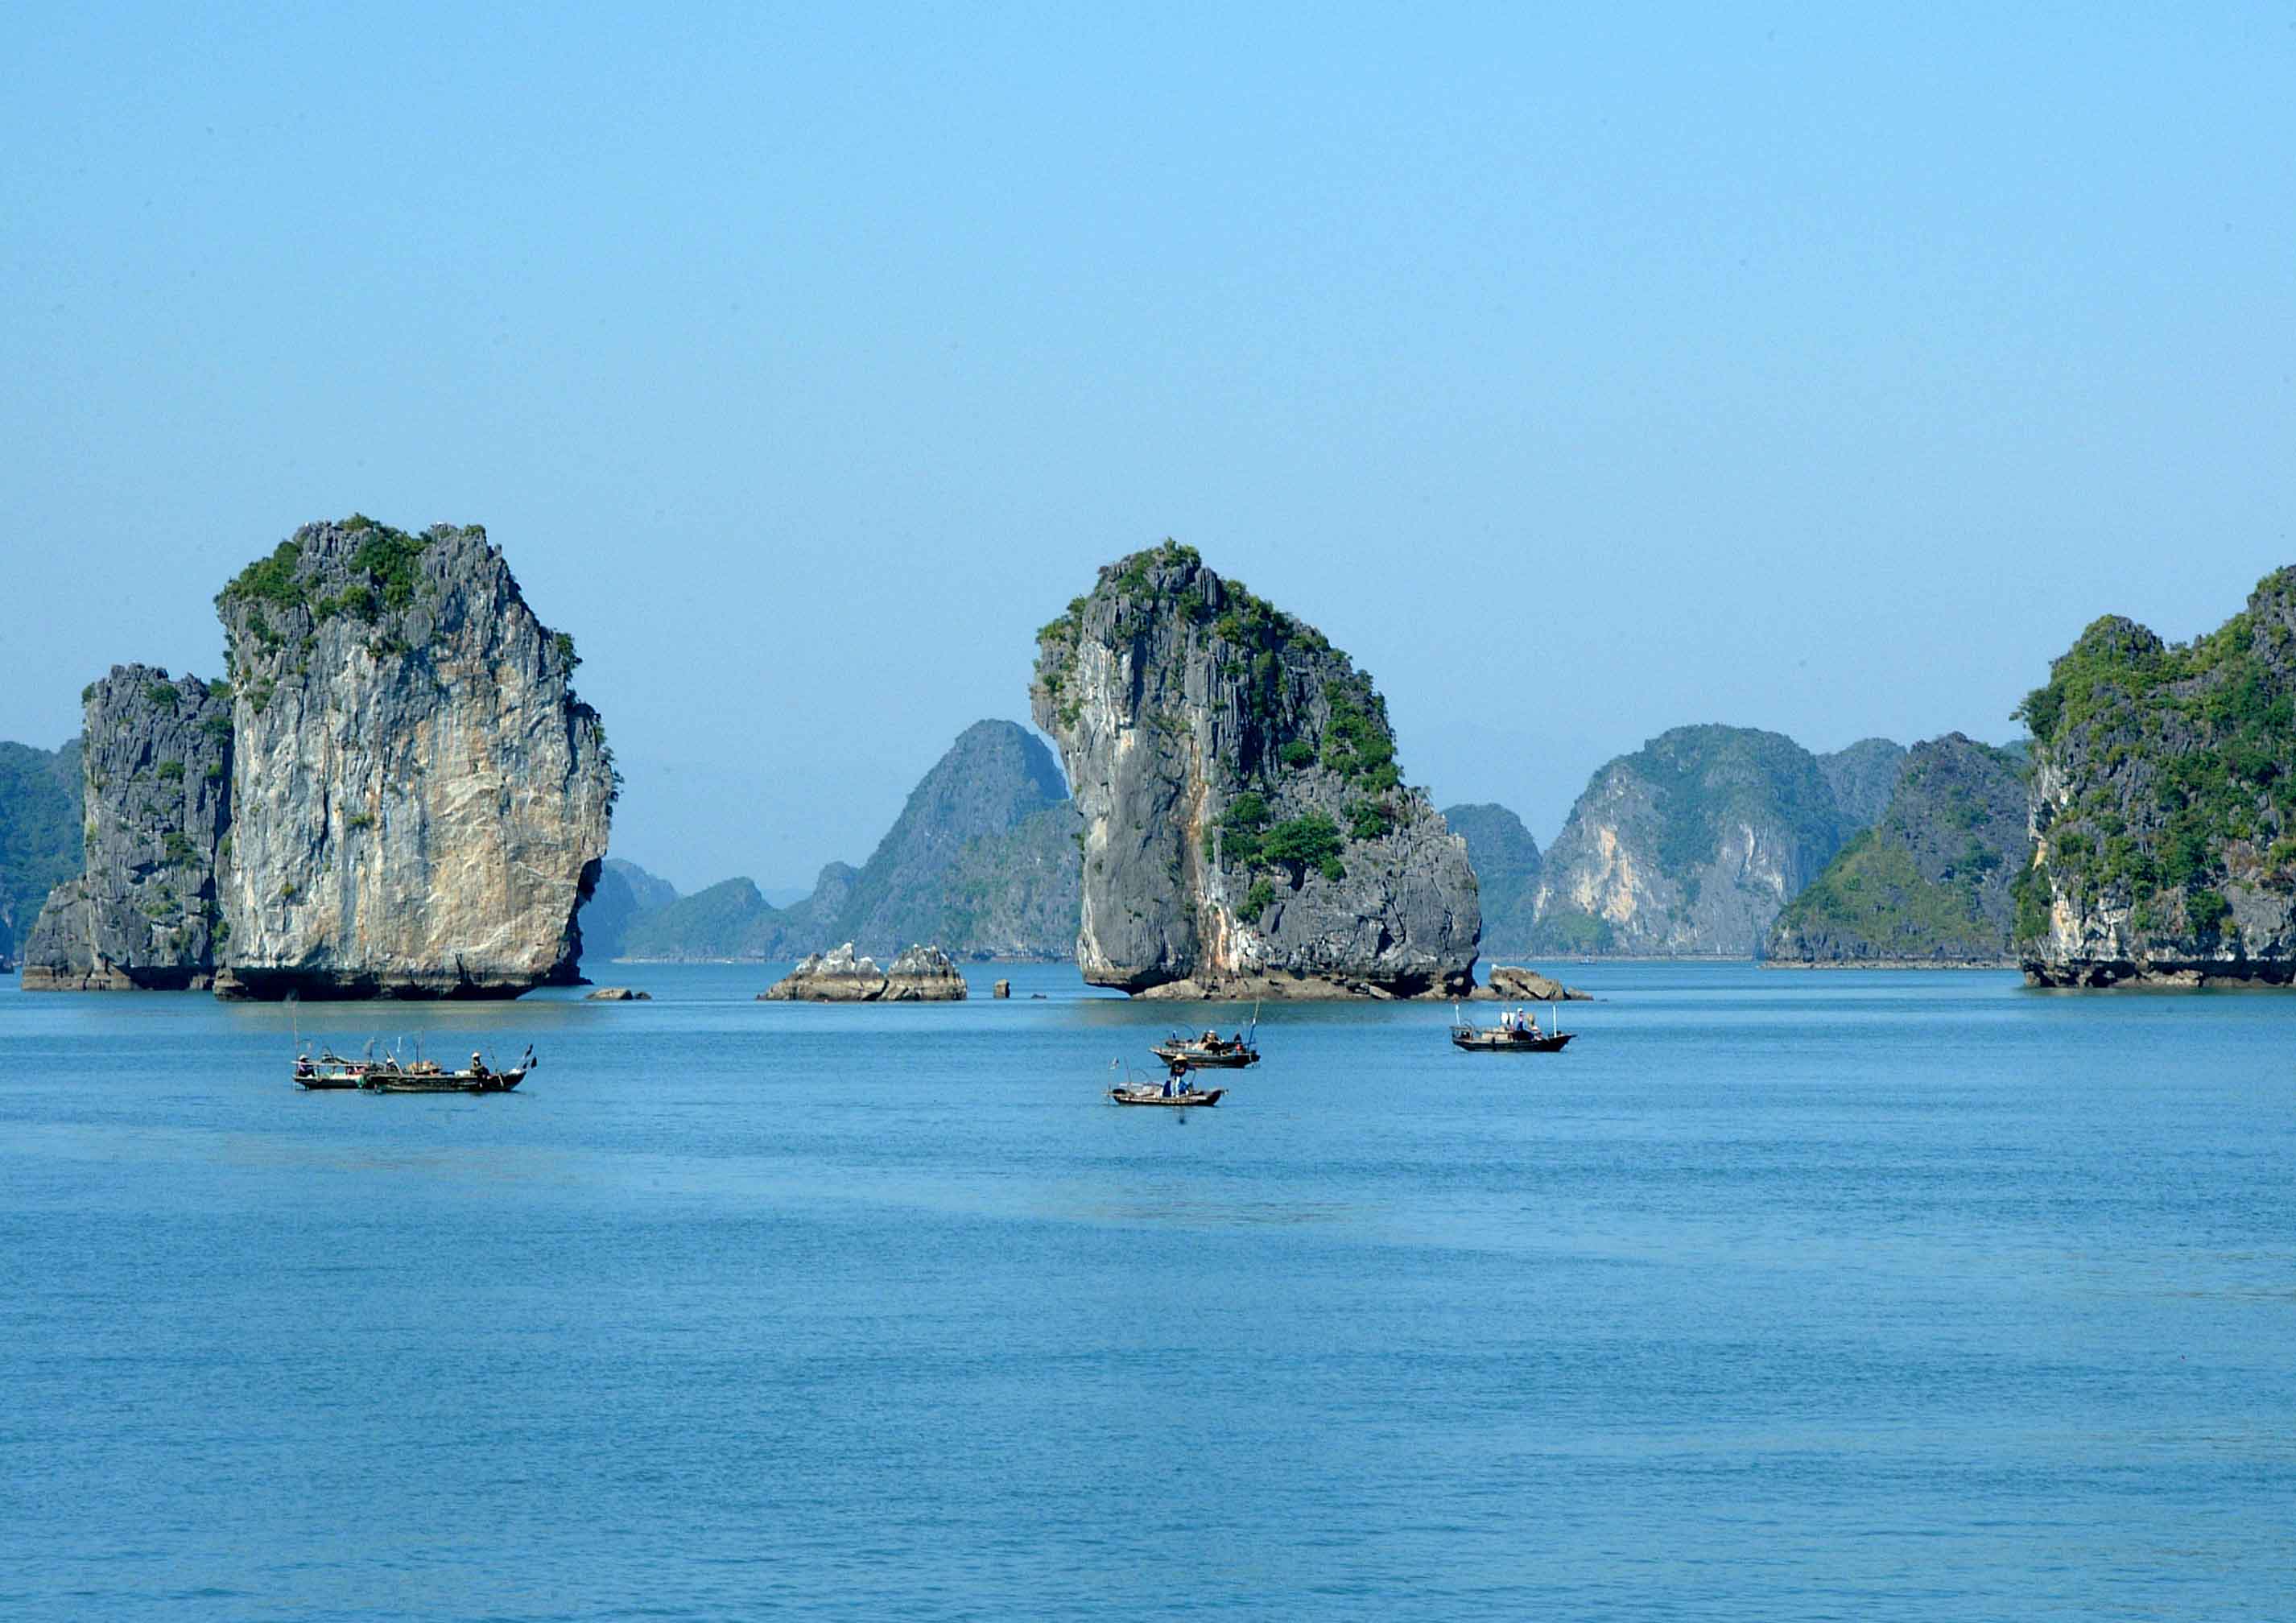 Halong Bay - Vietnam and Cambodia